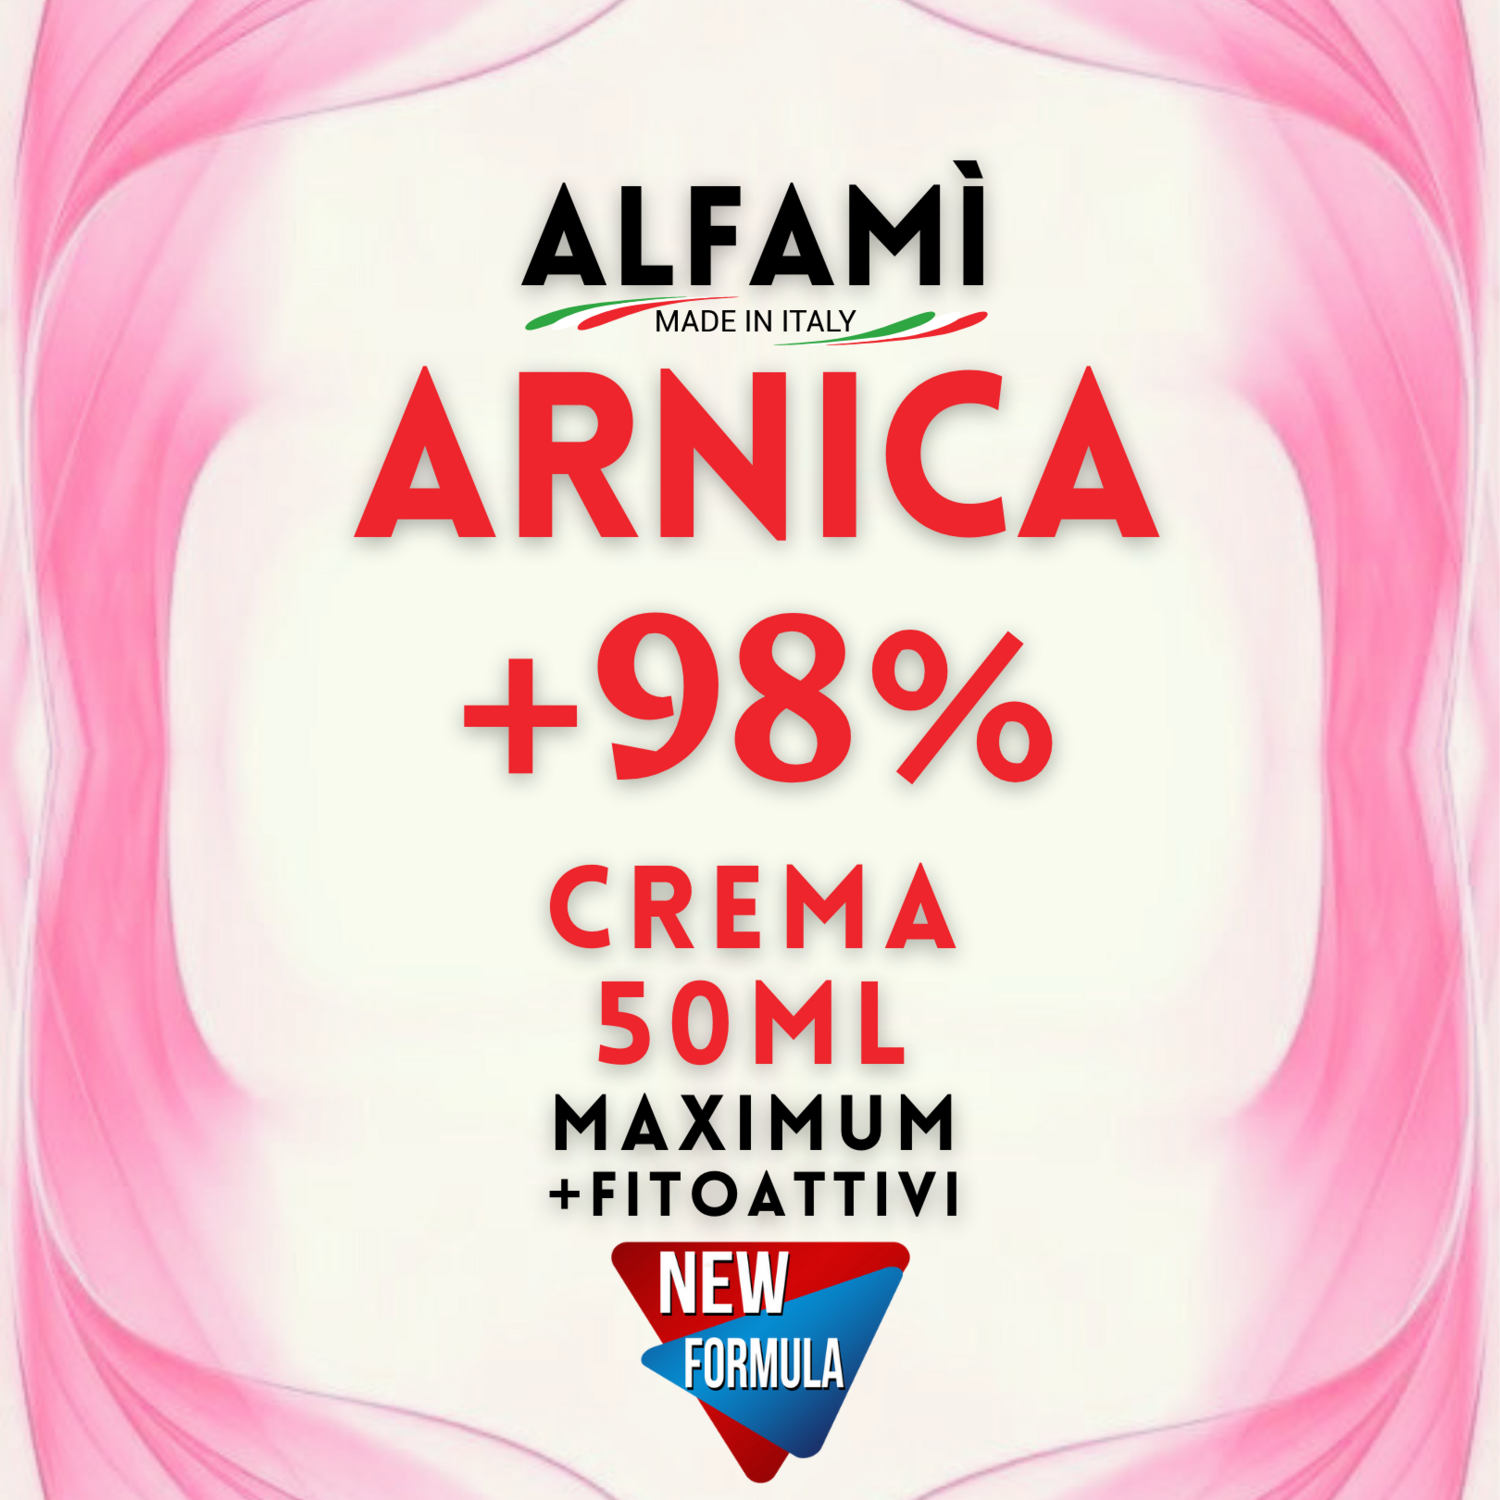 Arnica +98% crema 50ml